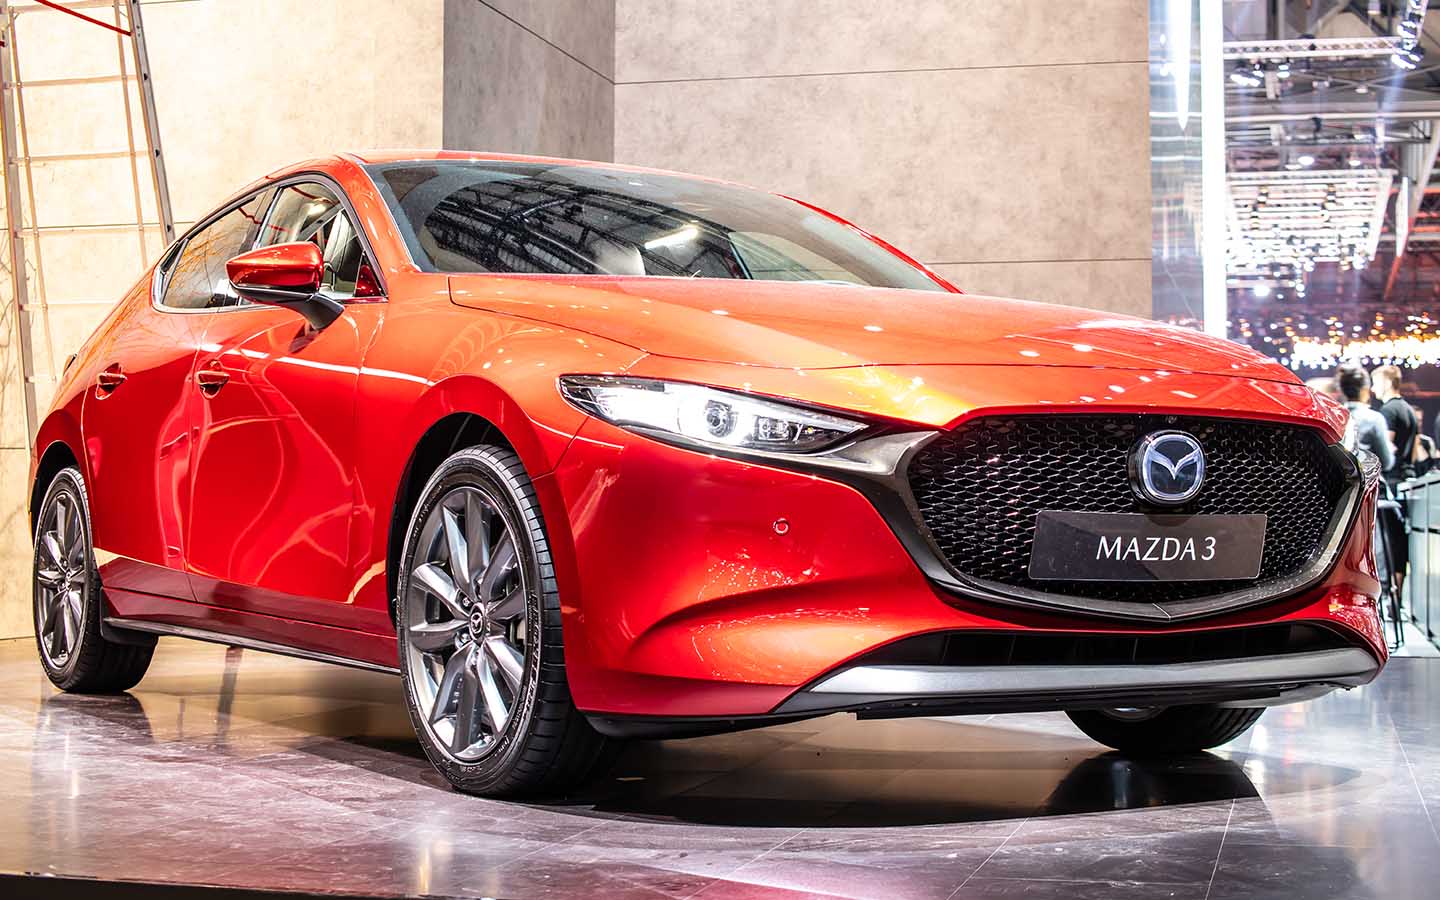 Mazda 3 ranks second on the list of top used Mazda models in 150k